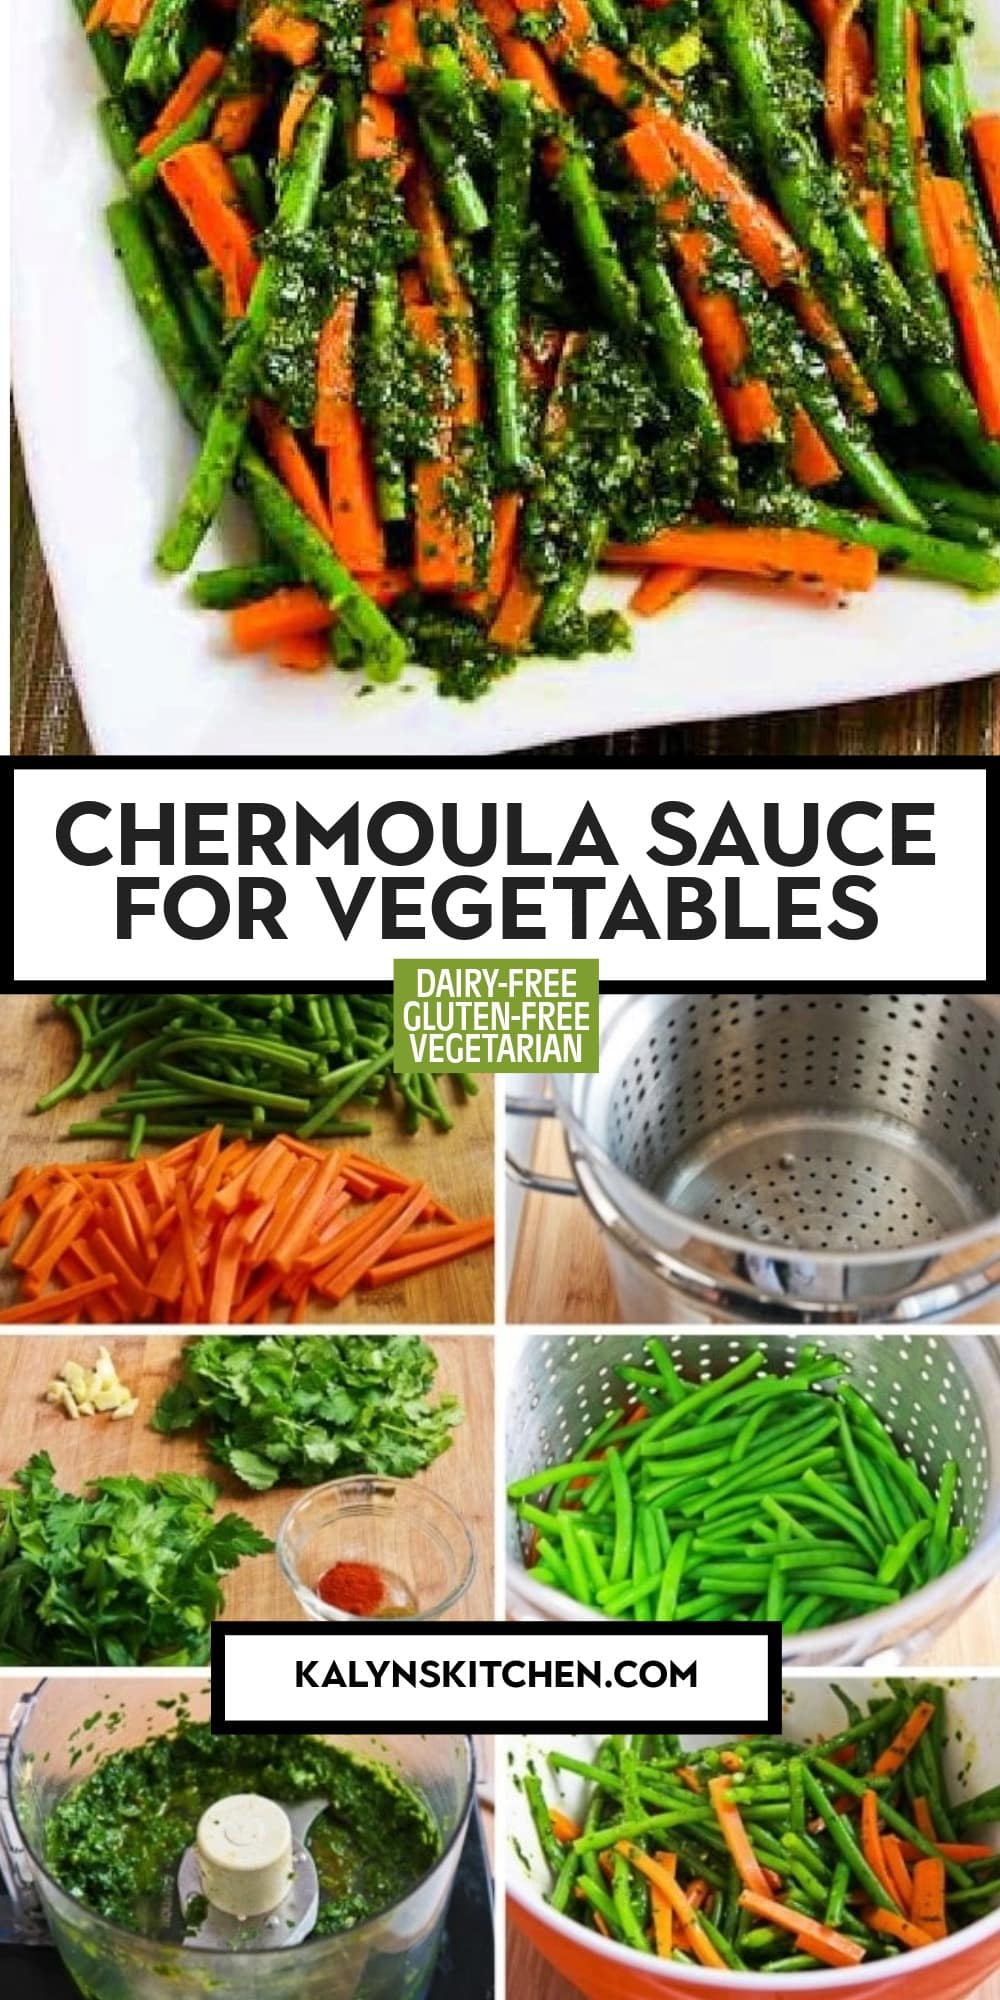 Pinterest image of Chermoula Sauce for Vegetables